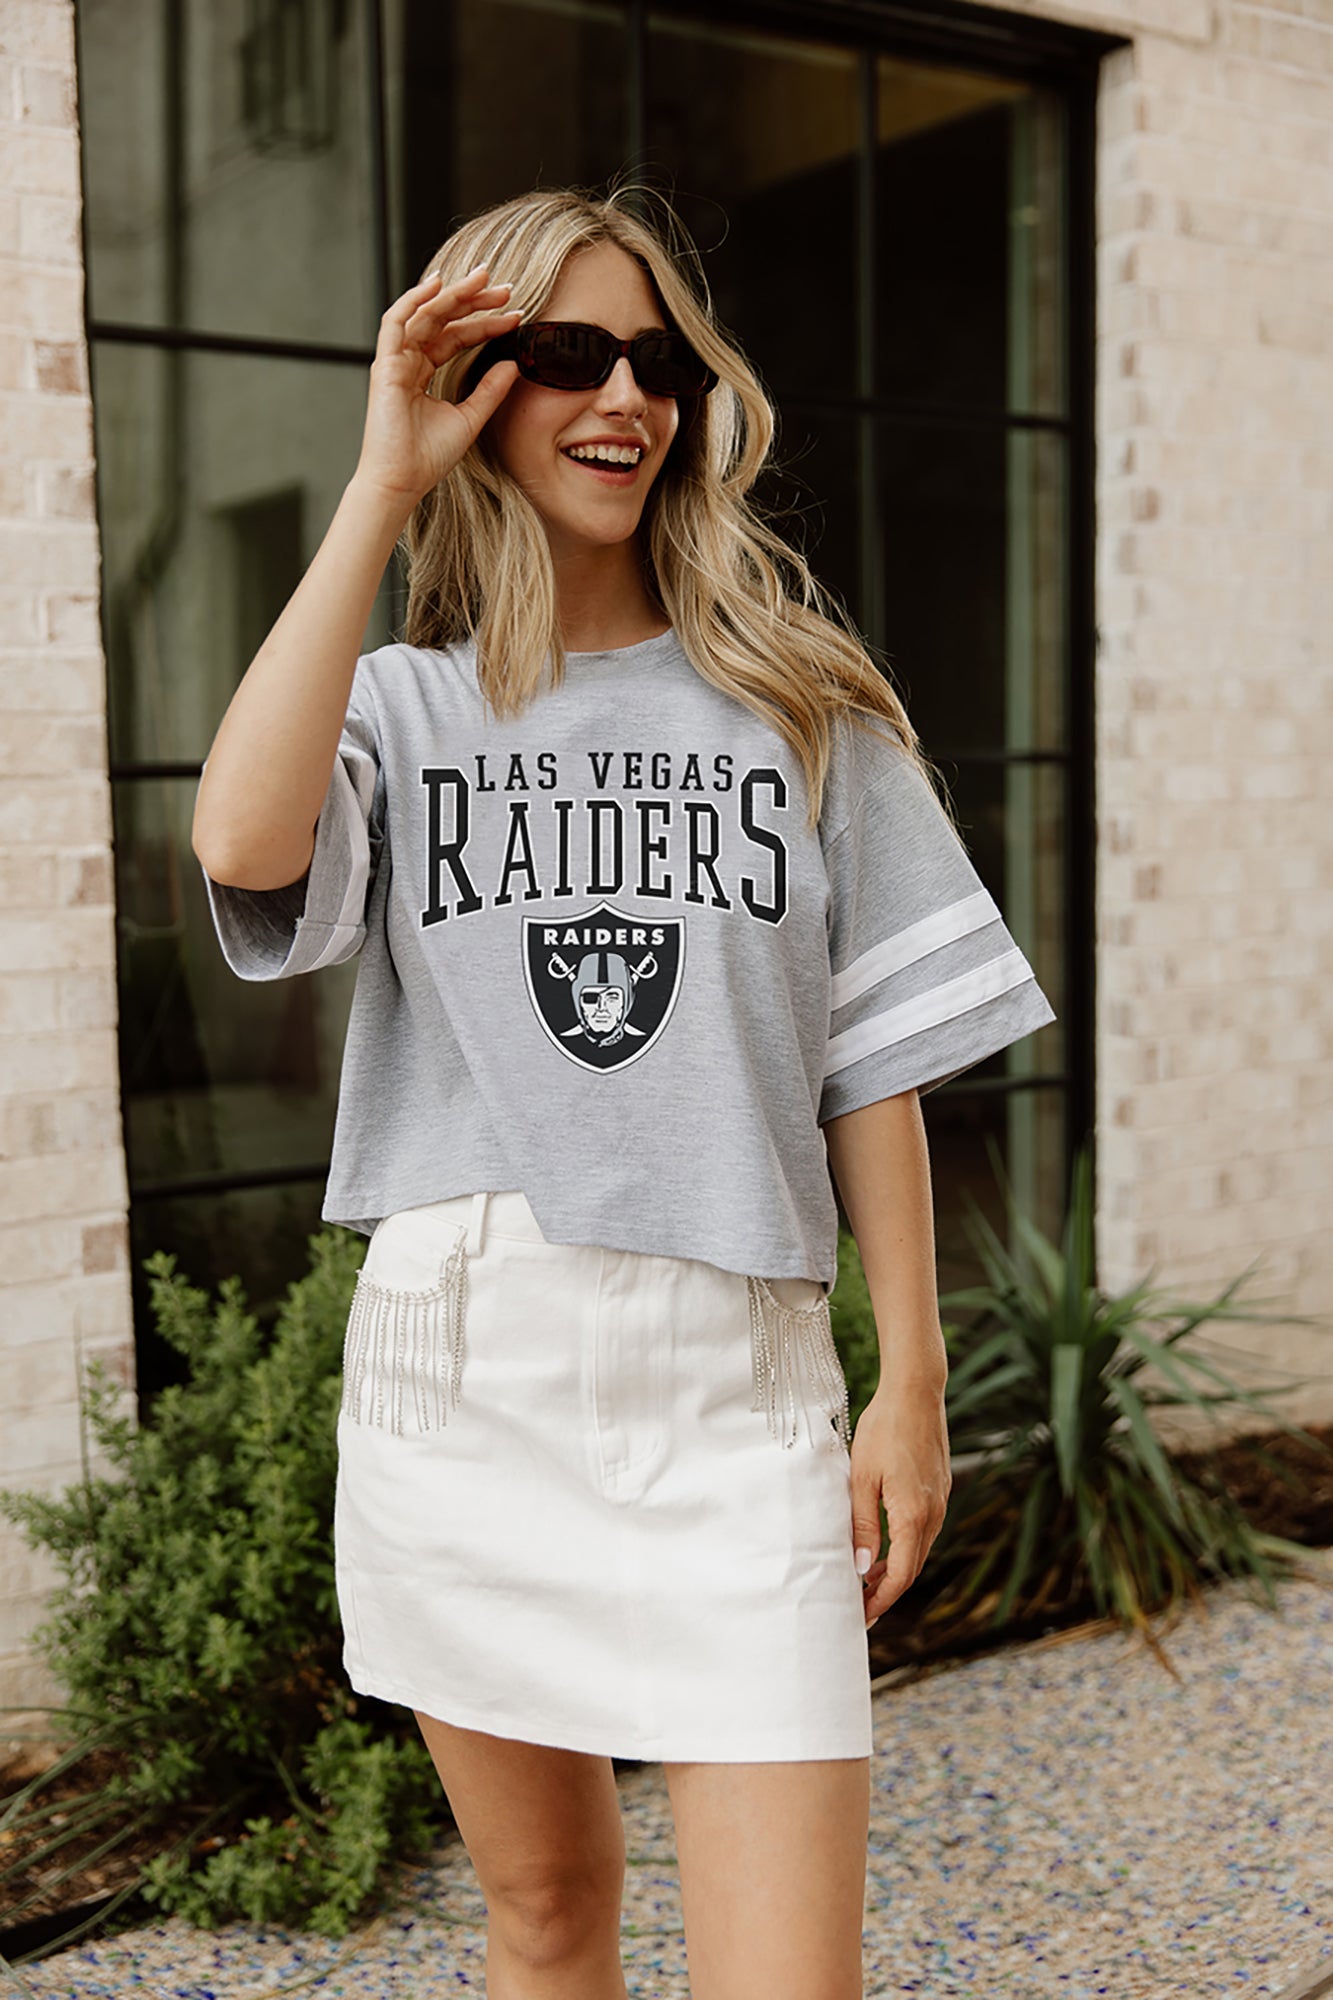 Las Vegas Raiders Gameday Couture Women's Victorious Vixen T-Shirt - White